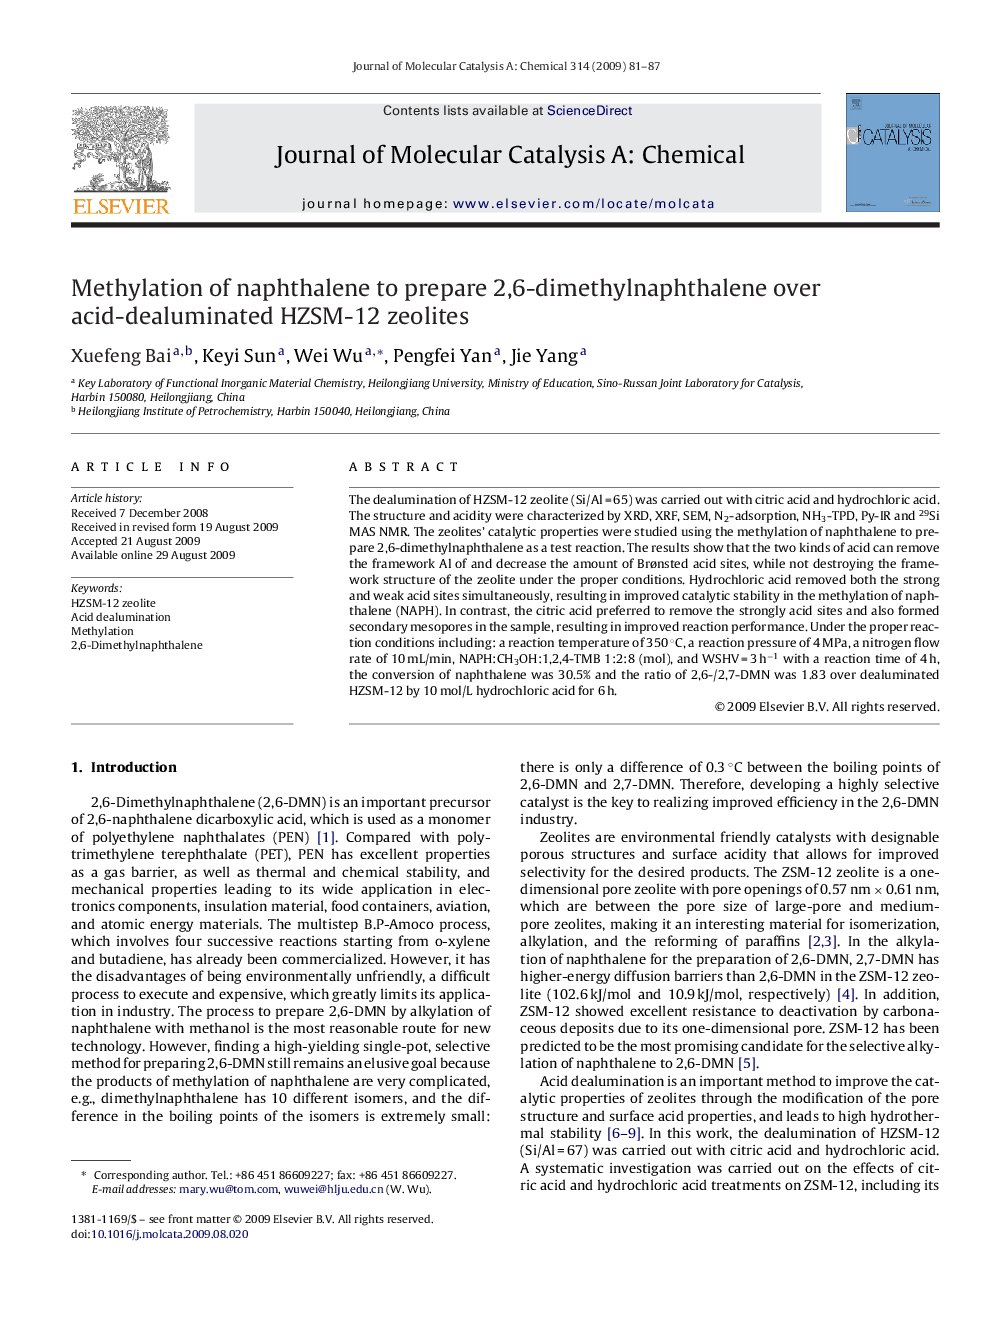 Methylation of naphthalene to prepare 2,6-dimethylnaphthalene over acid-dealuminated HZSM-12 zeolites